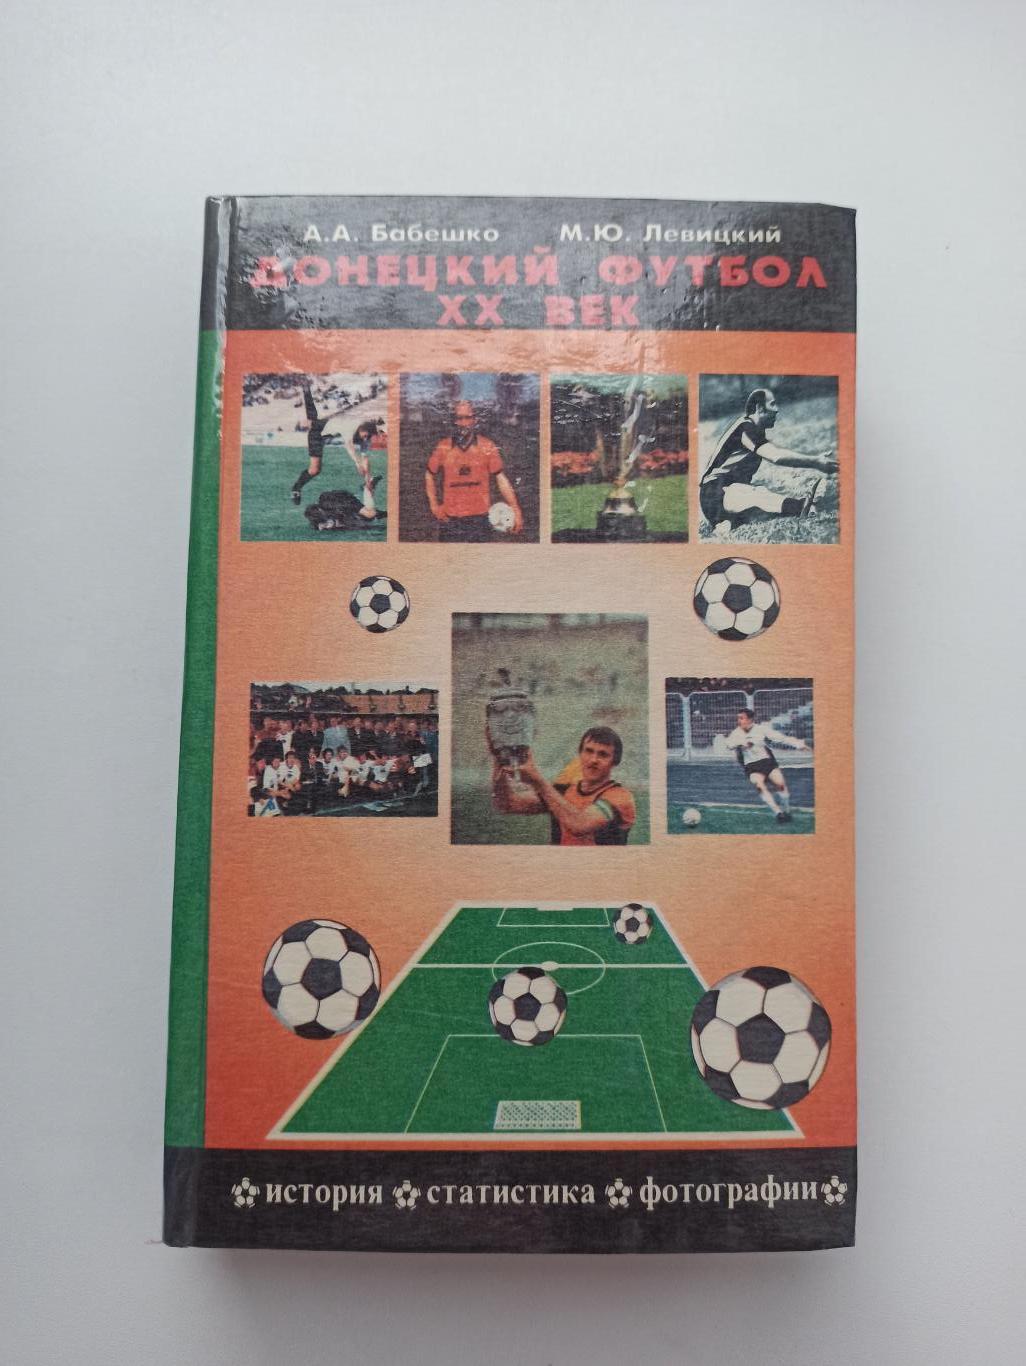 Книга, Донецкий футбол 20 век, история, статистика, фото, Шахтёр